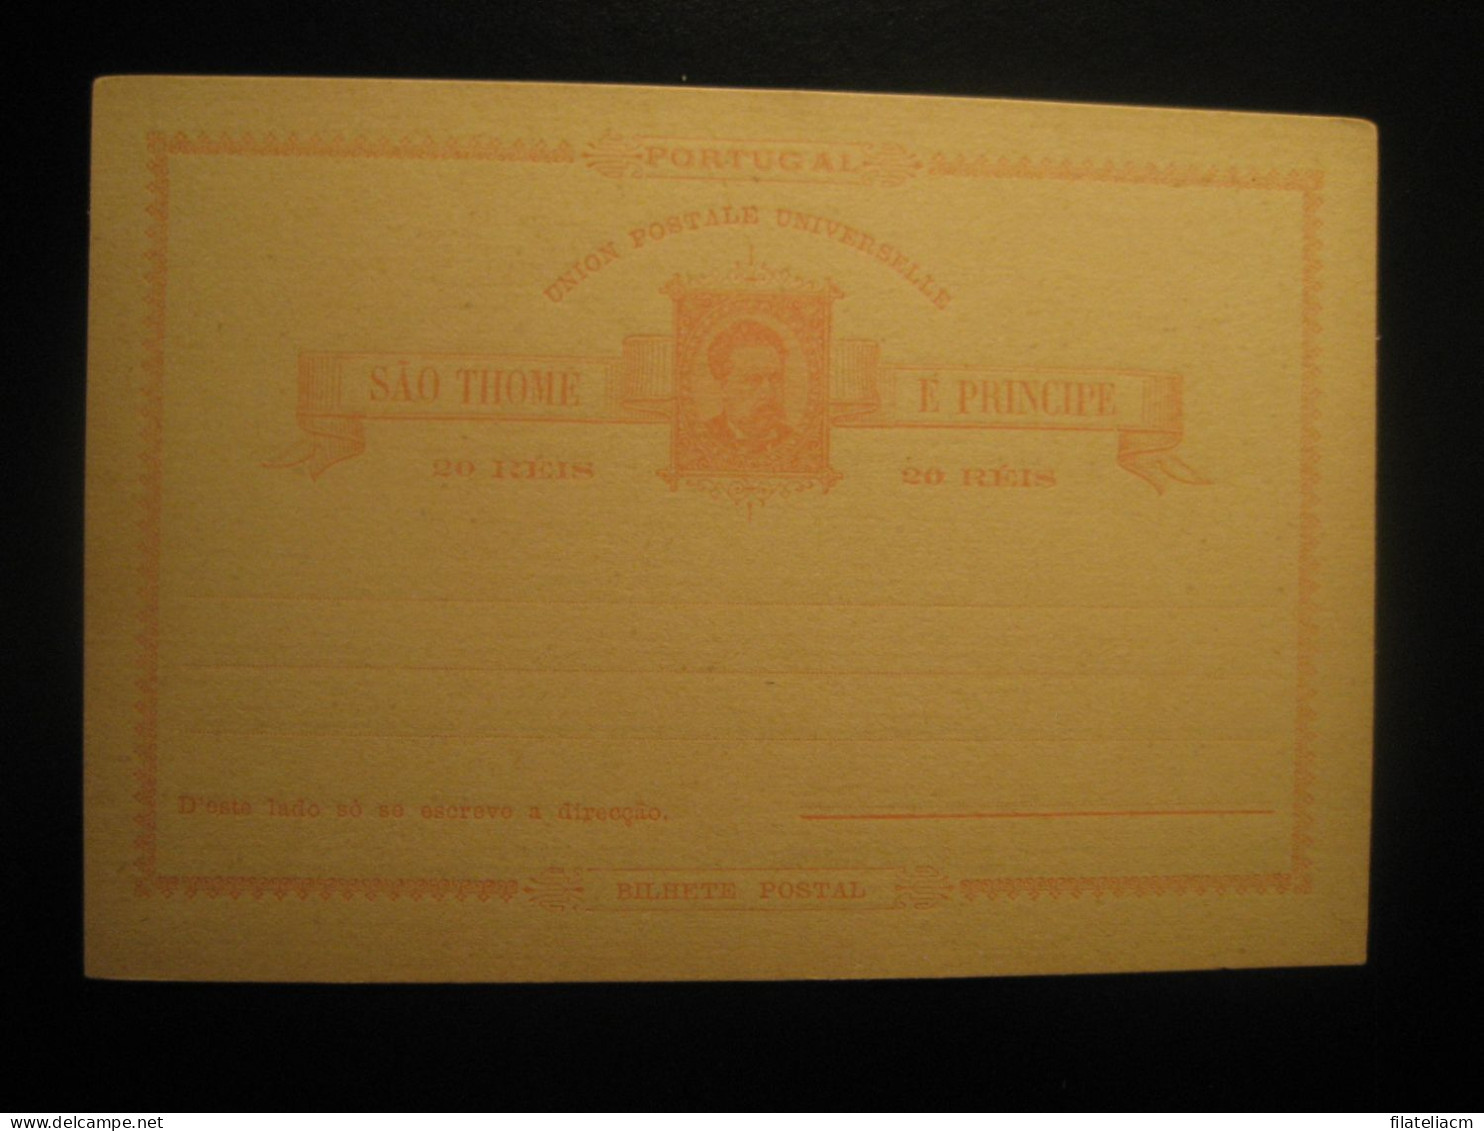 SAO TOME E PRINCIPE 20 Reis UPU Bilhete Postal Light Red Color Stationery Card Portuguese Colonies Portugal Guinea Area - St. Thomas & Prince